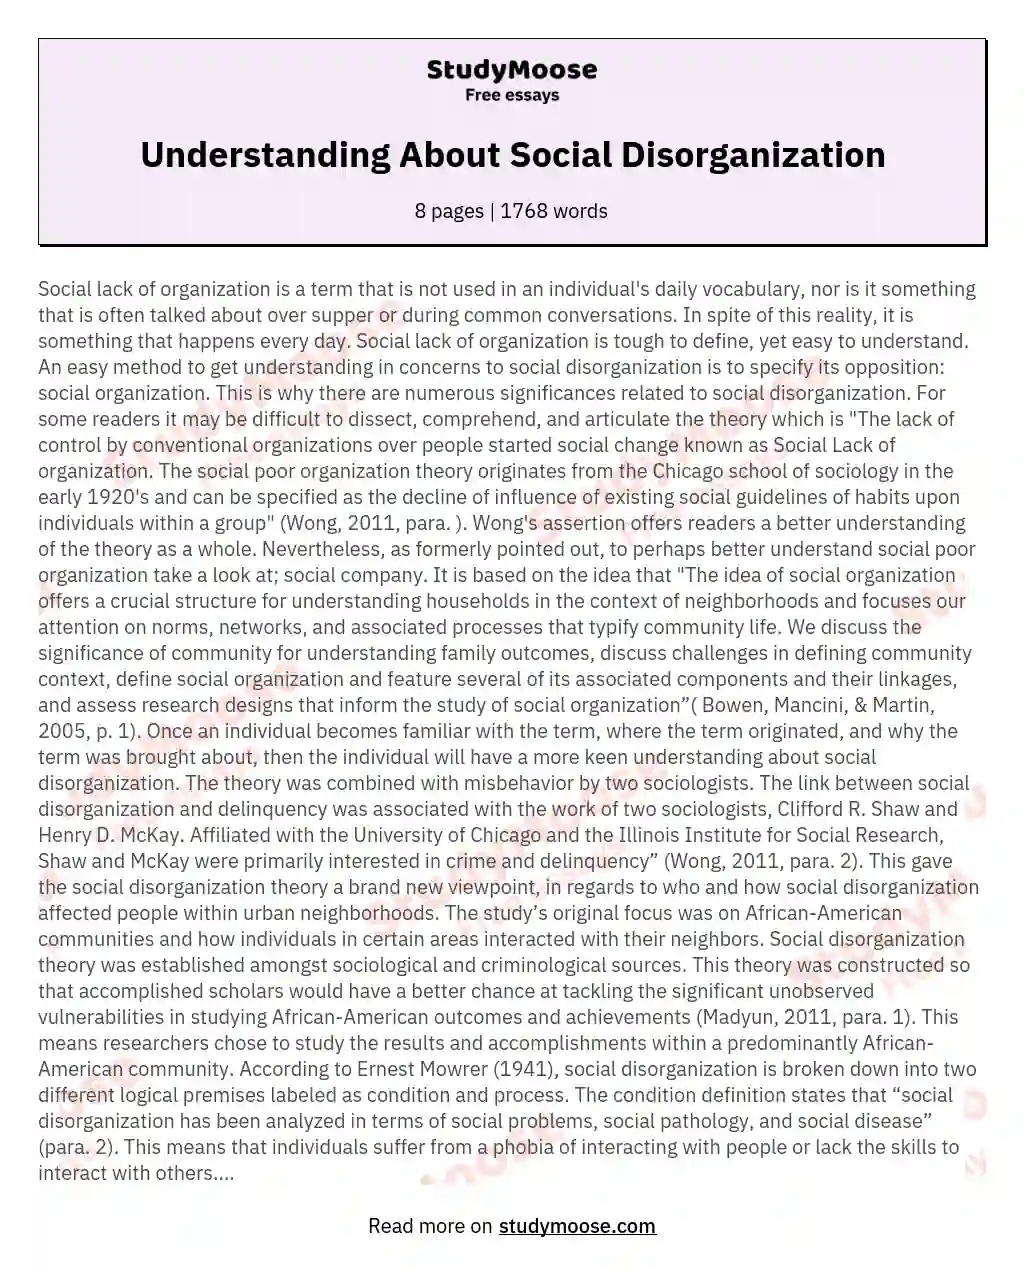 Understanding About Social Disorganization essay